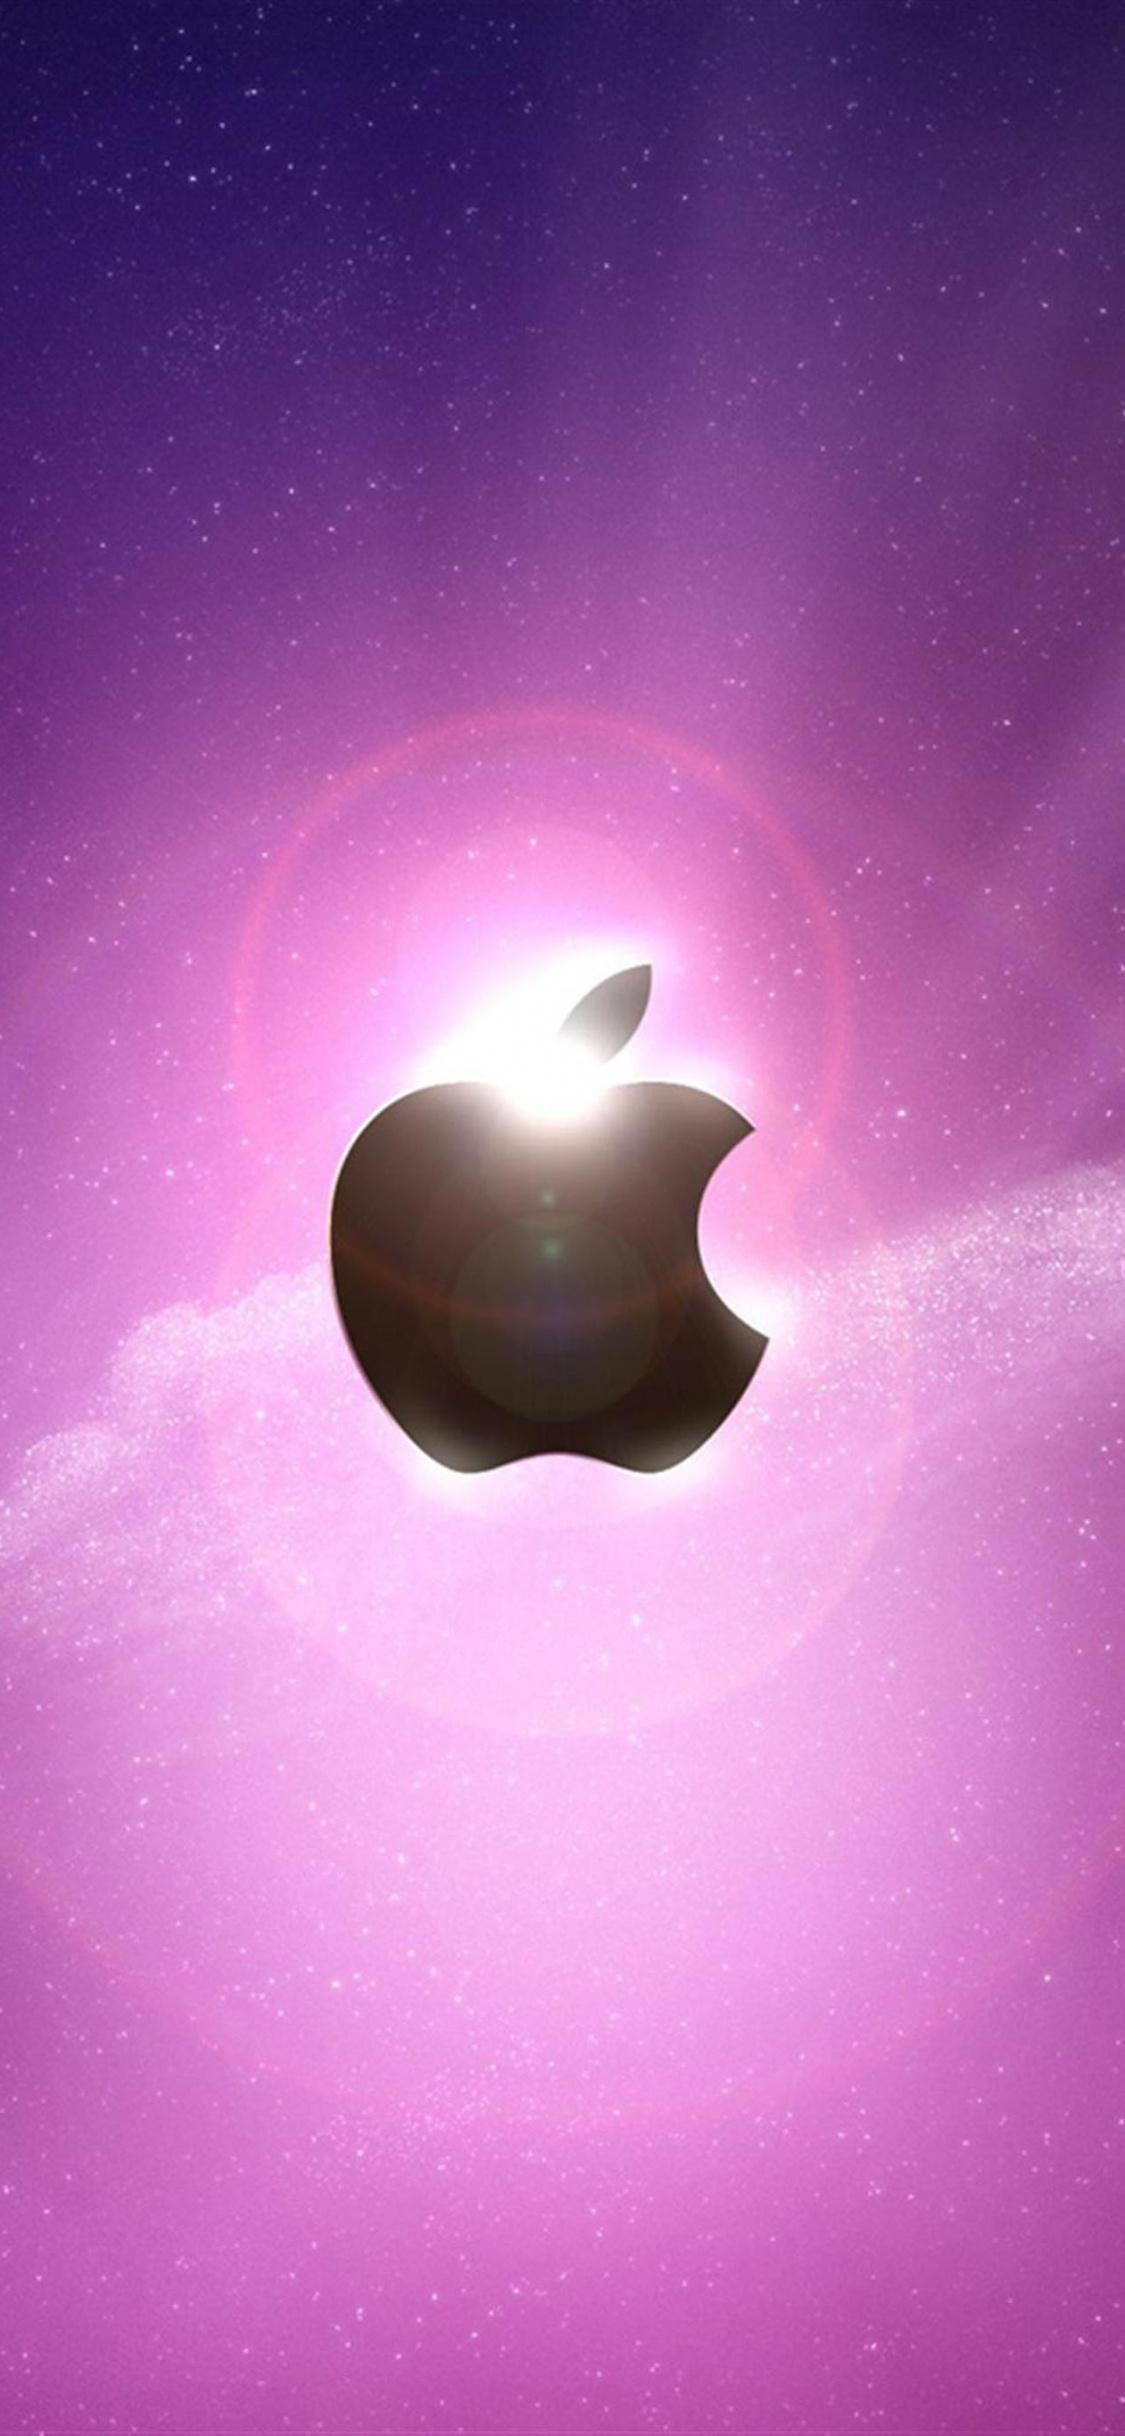 Apple MacBook Pro, Purple, Violette, Atmosphère, Espace. Wallpaper in 1125x2436 Resolution